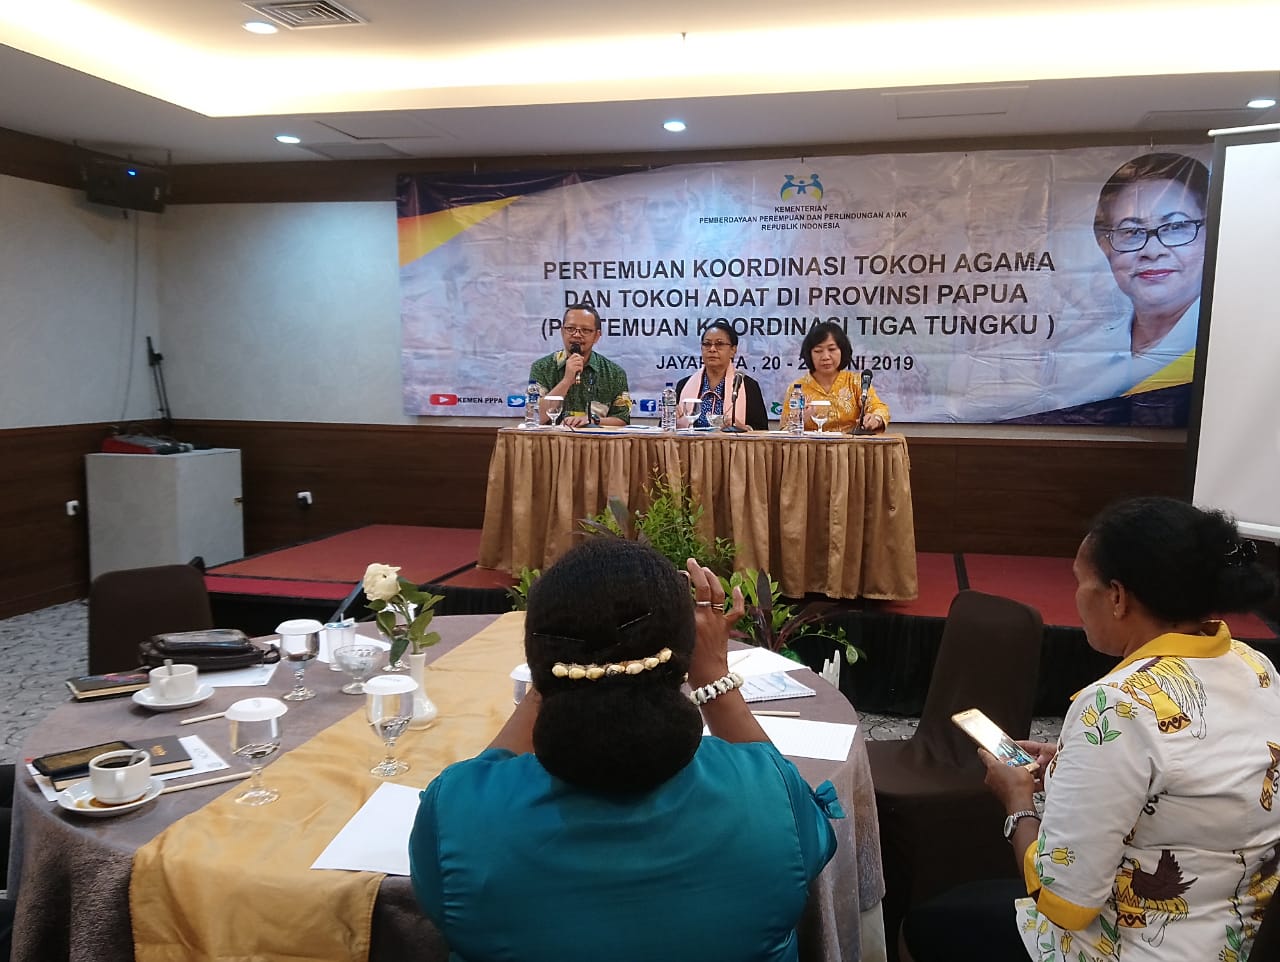 Menteri Yohana Soroti Masalah Pemberdayaan Perempuan Dalam Pertemuan Tiga Tungku